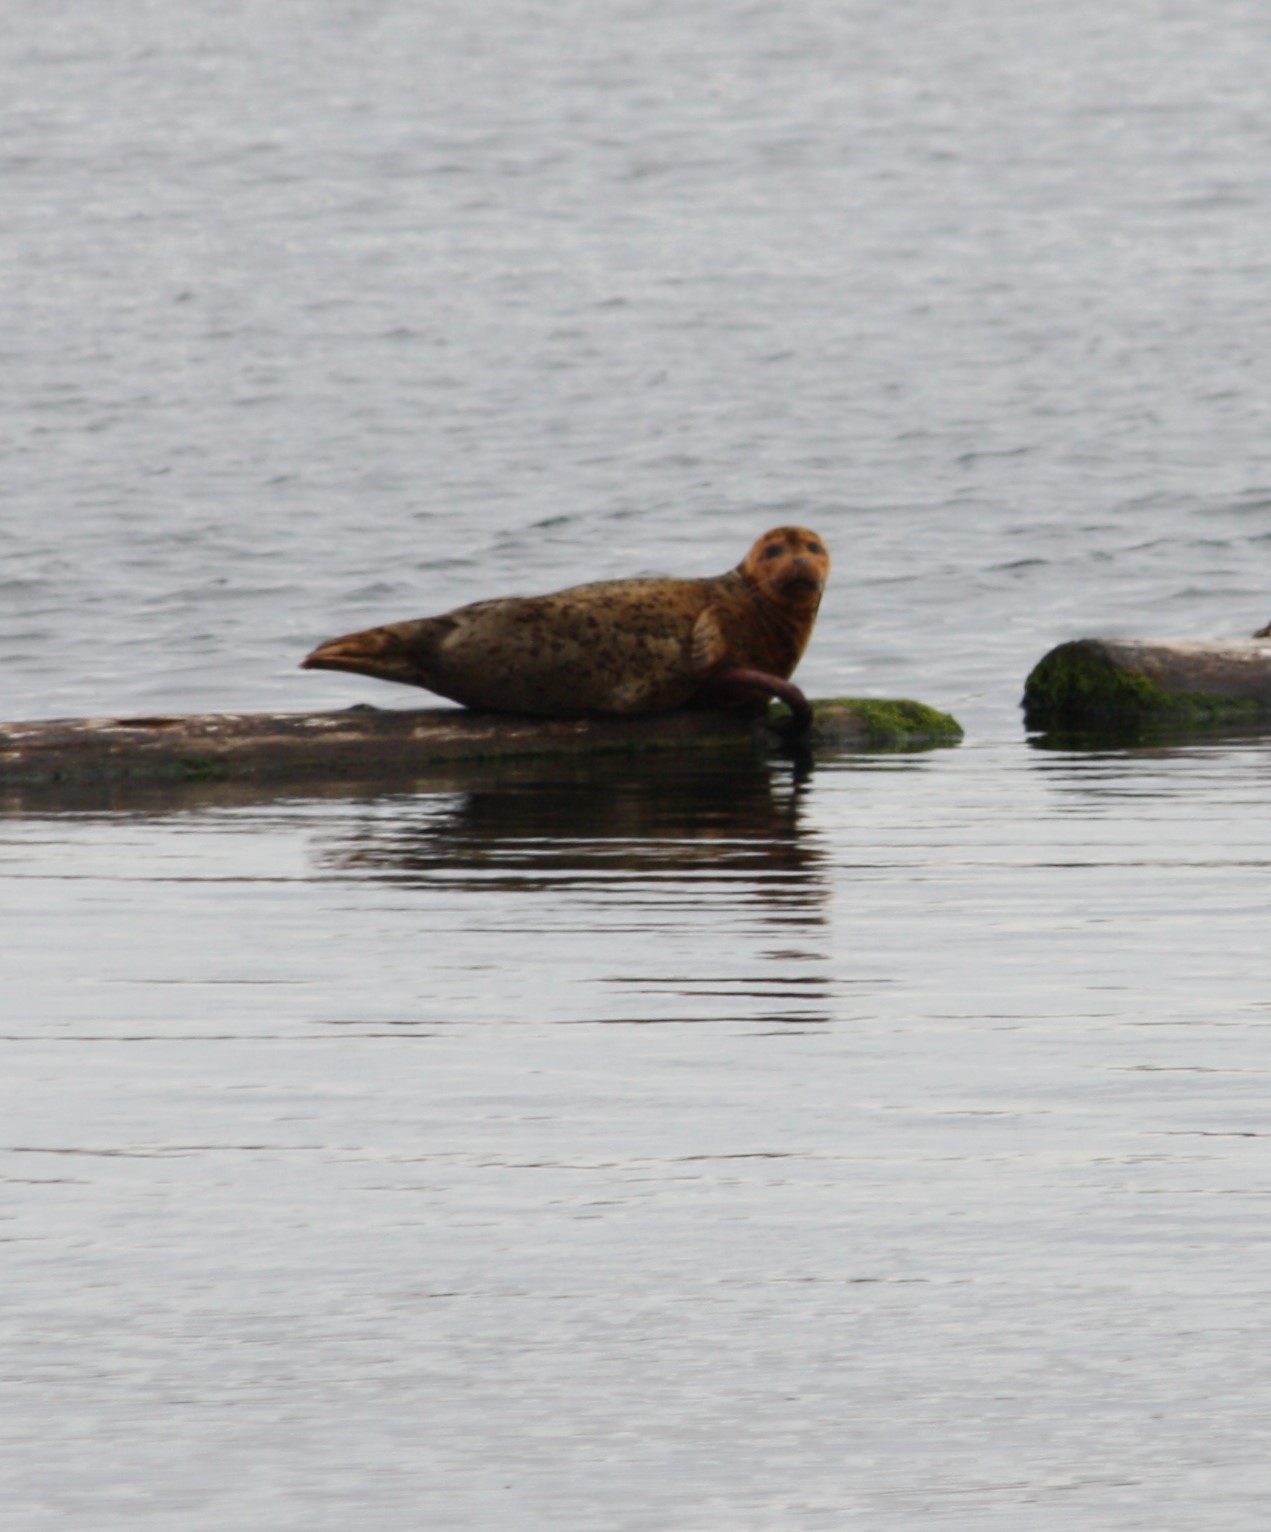 A closeup of seal on a log